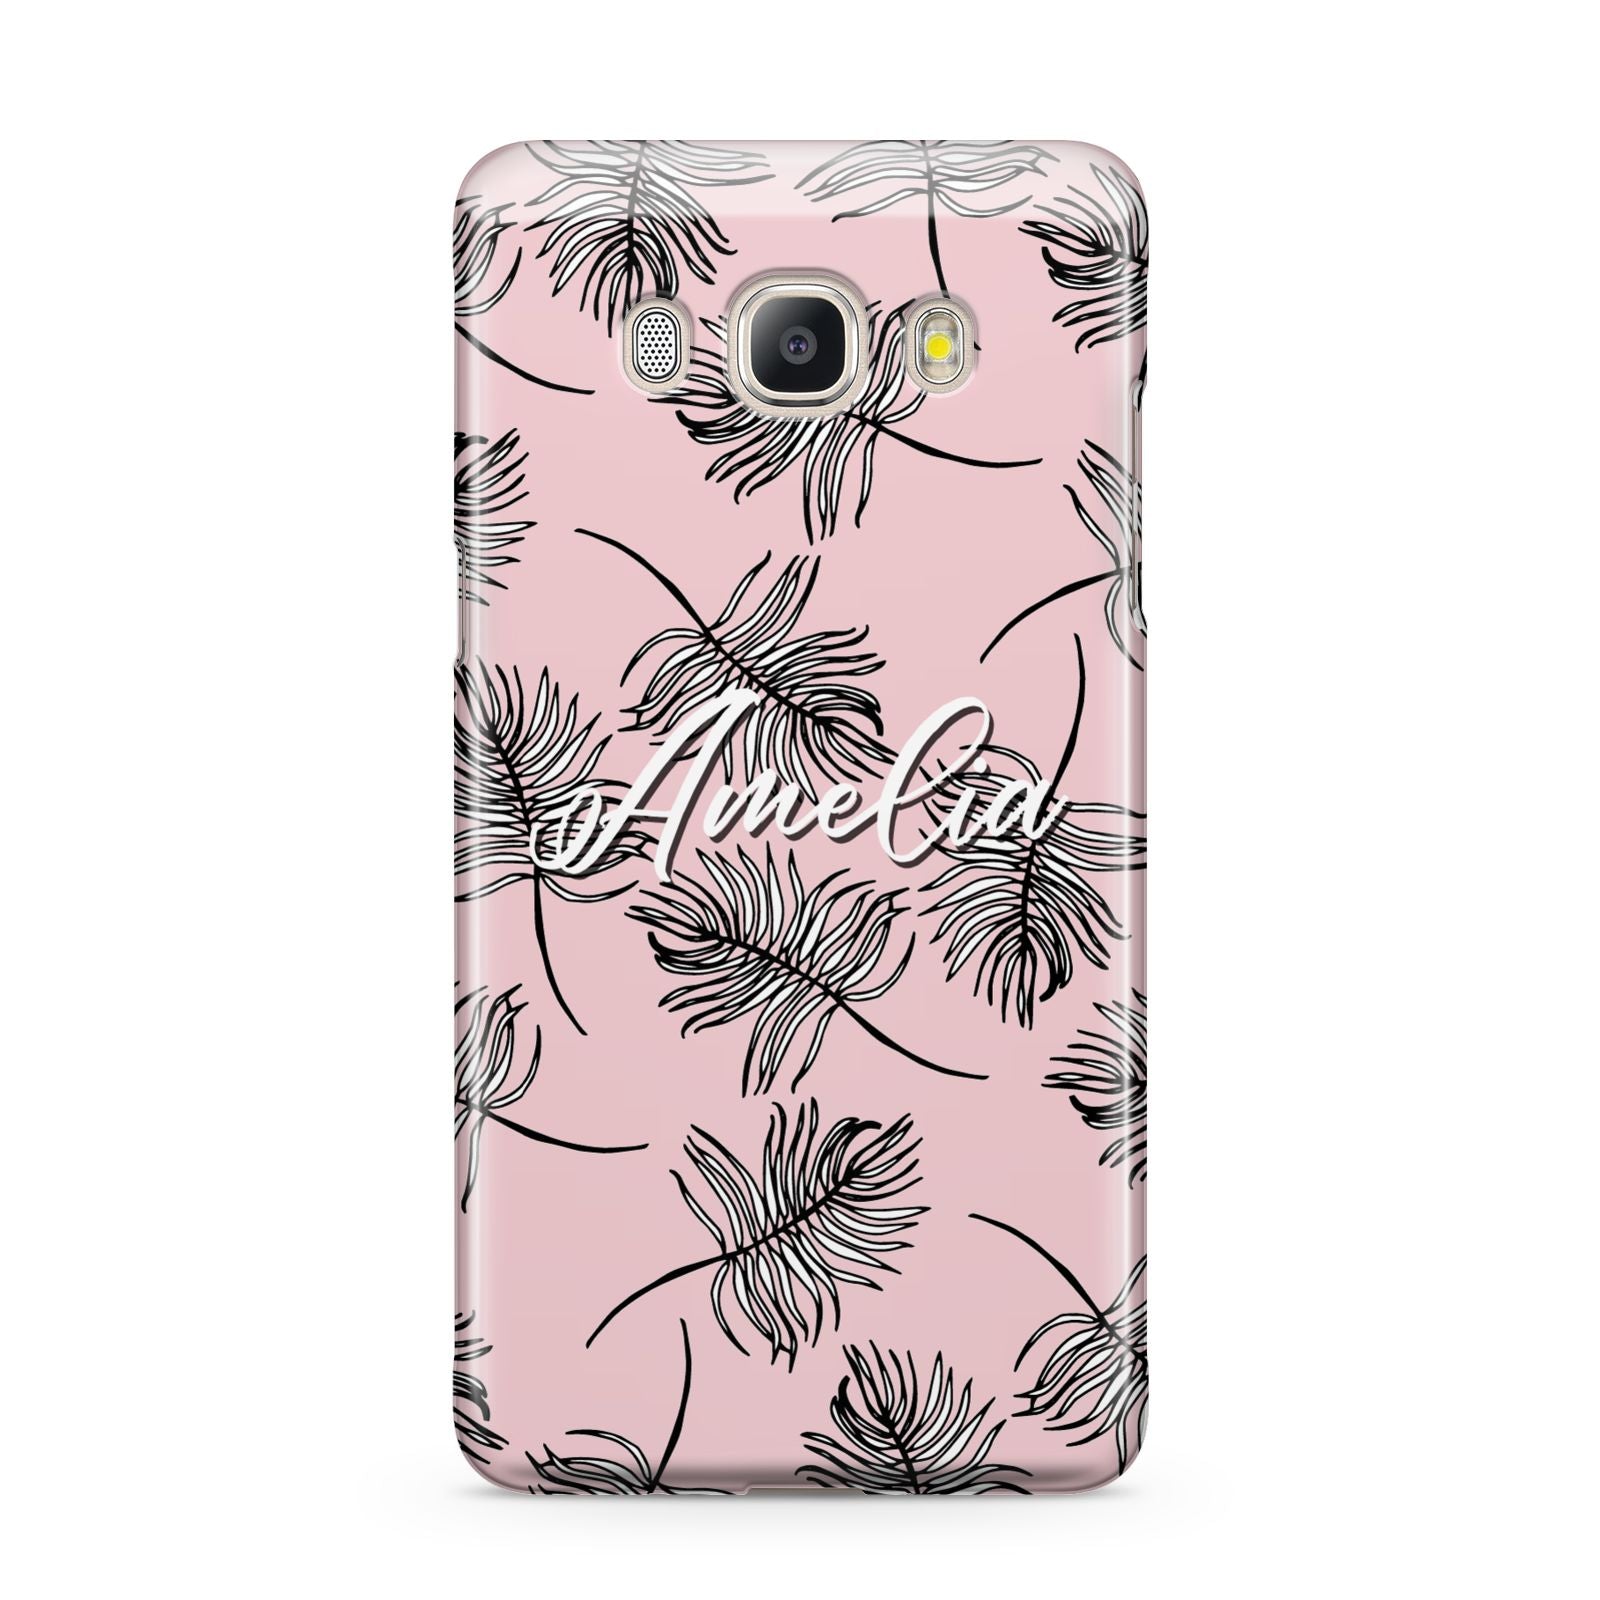 Personalised Pink Monochrome Tropical Leaf Samsung Galaxy J5 2016 Case